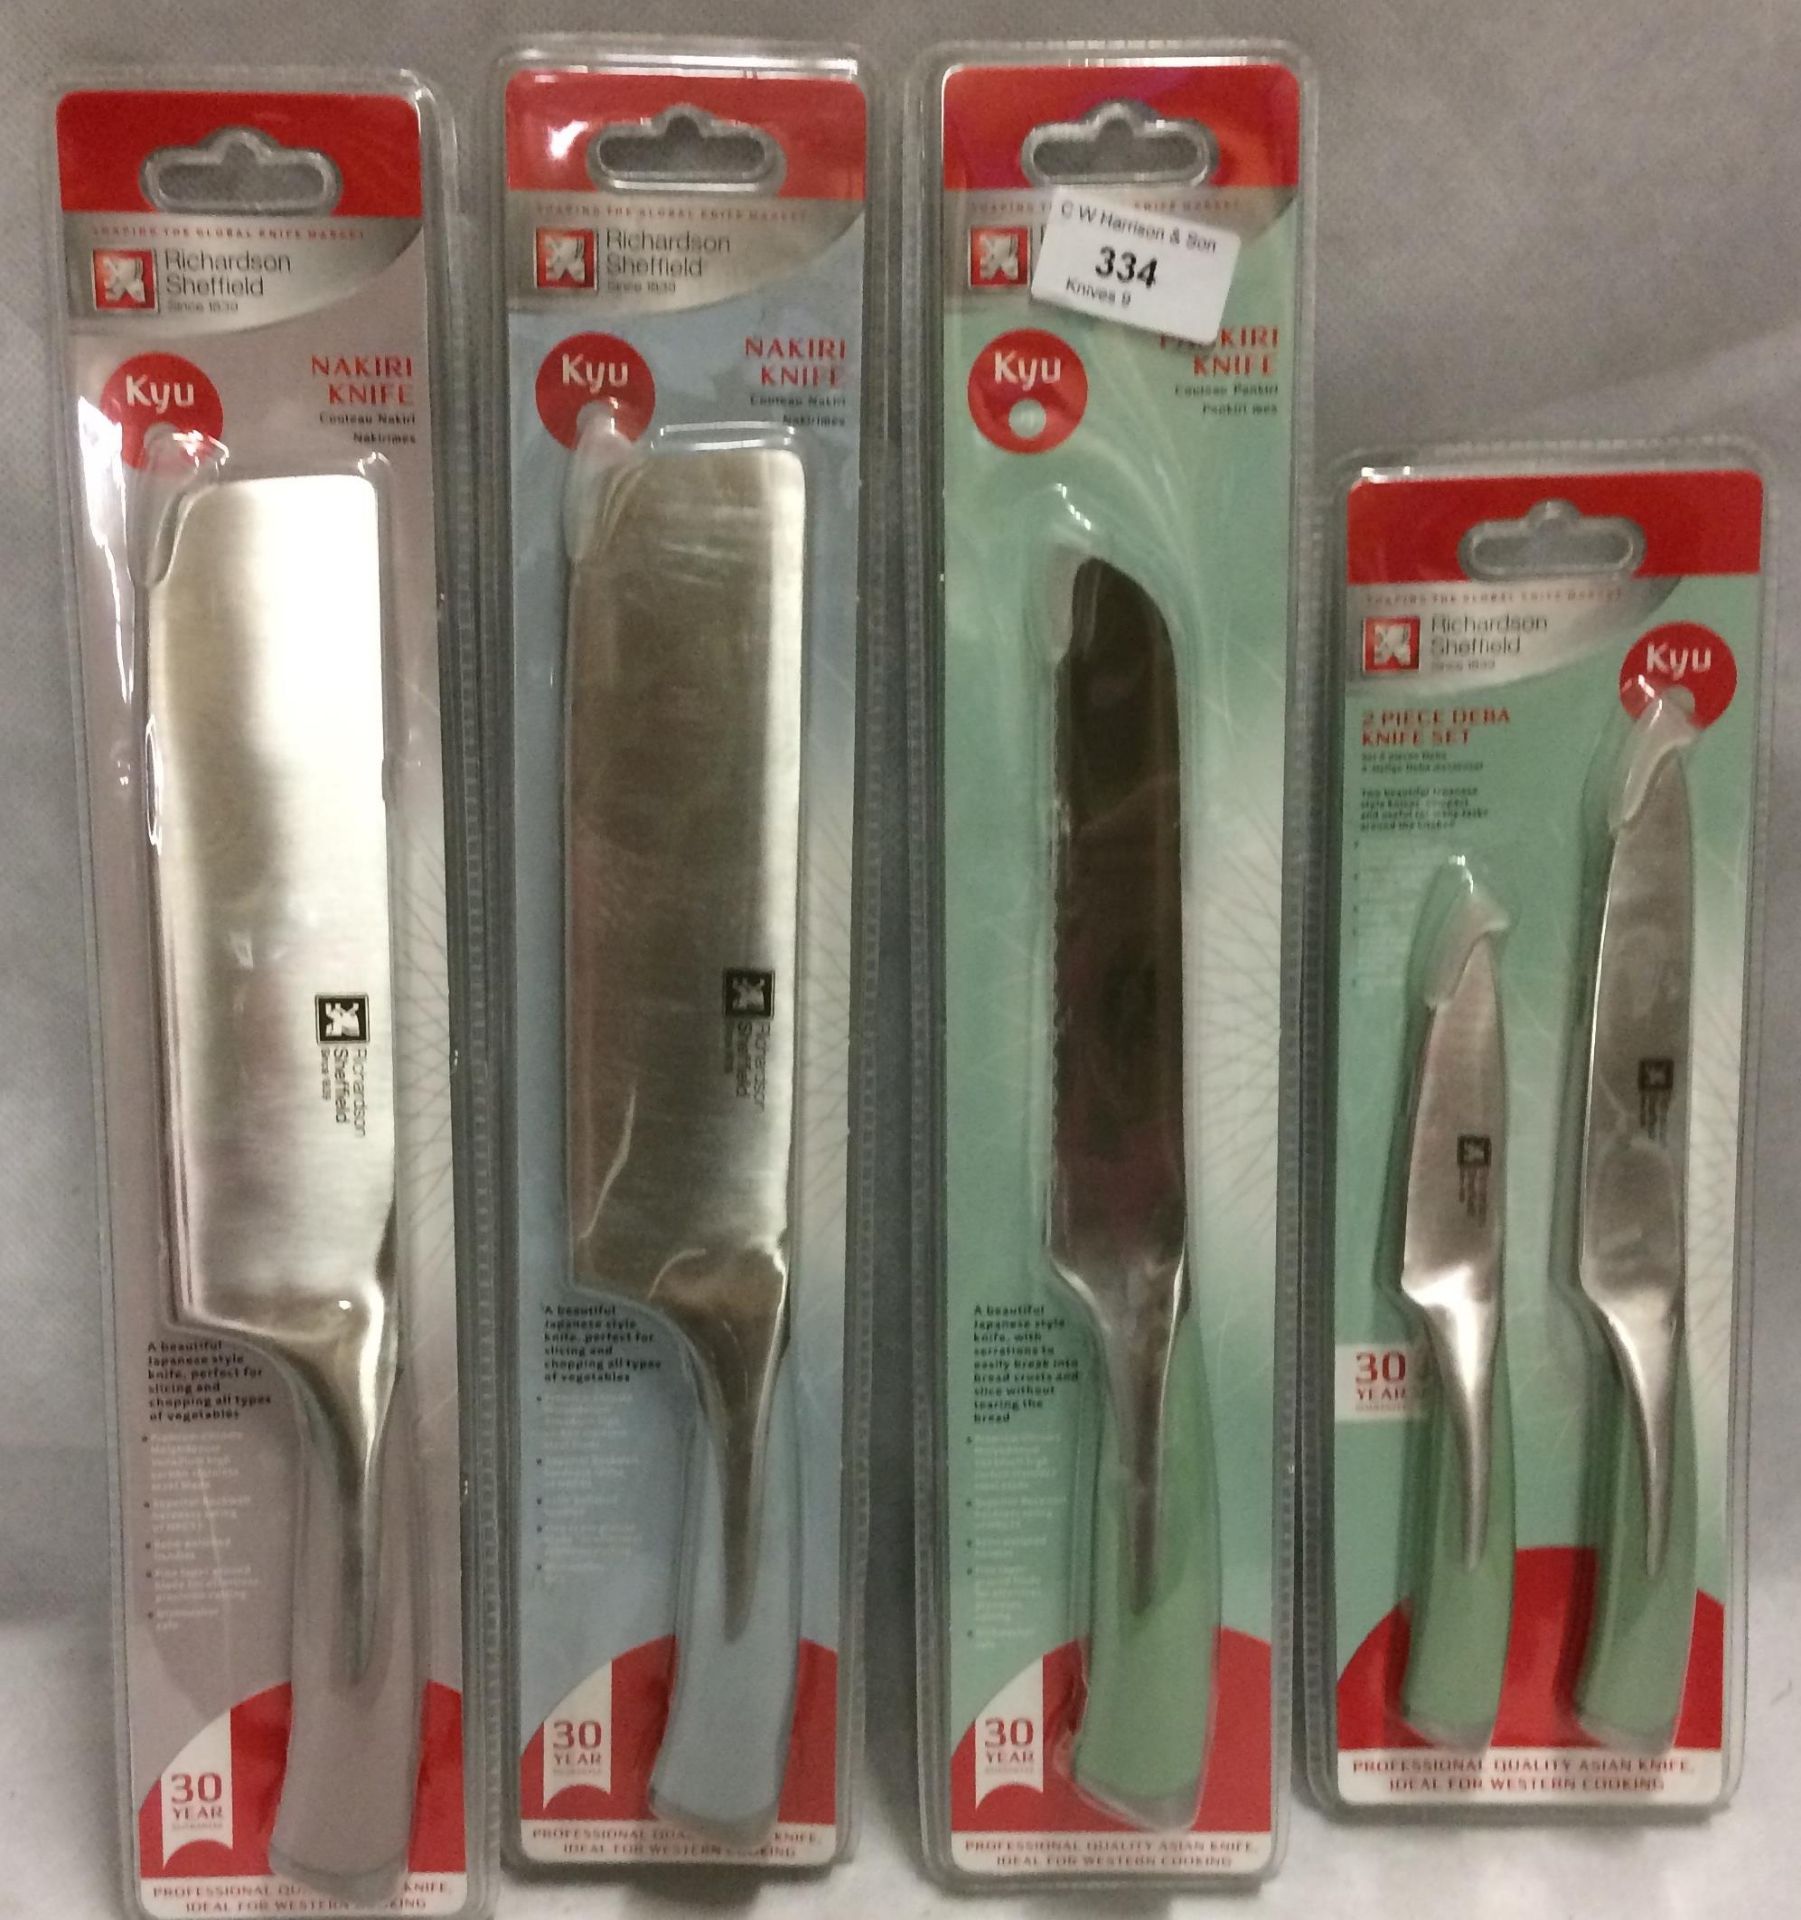 4 x Kyu items - 2 piece Deba knife sets,